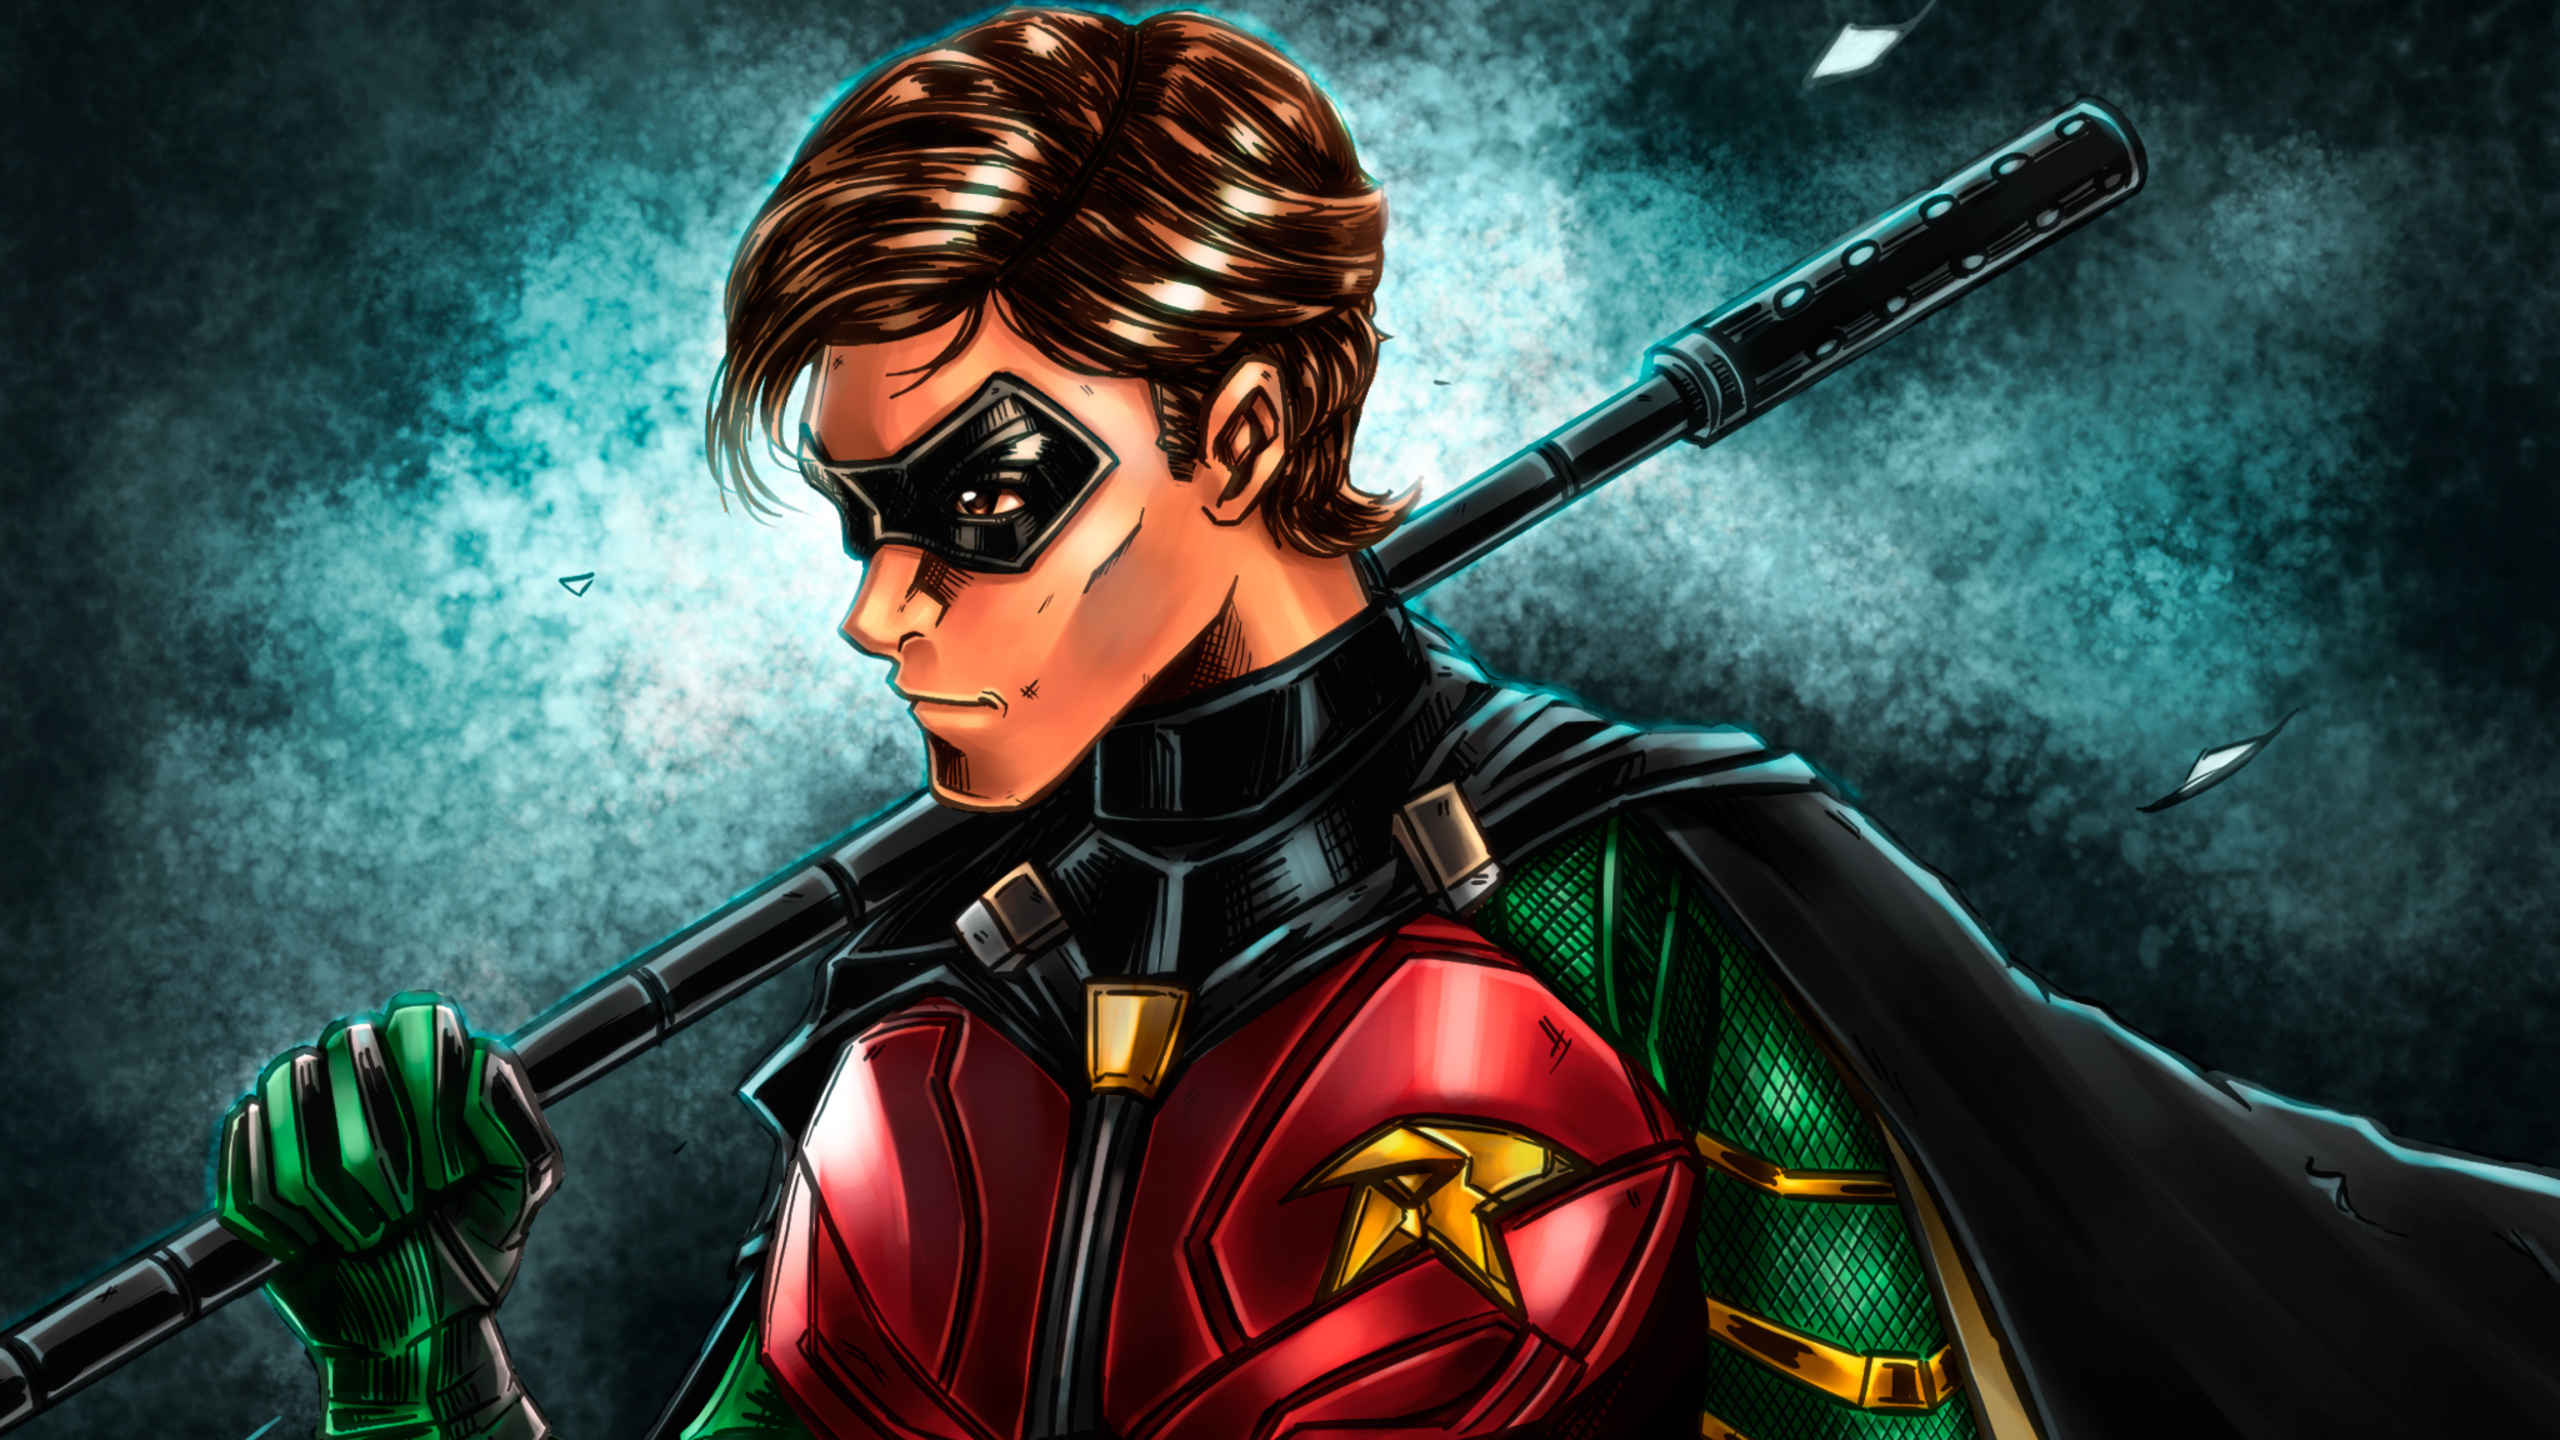 Robin Titans Artwork In 2560x1440 Resolution. robin-titans-artwork-u4.jpg. 